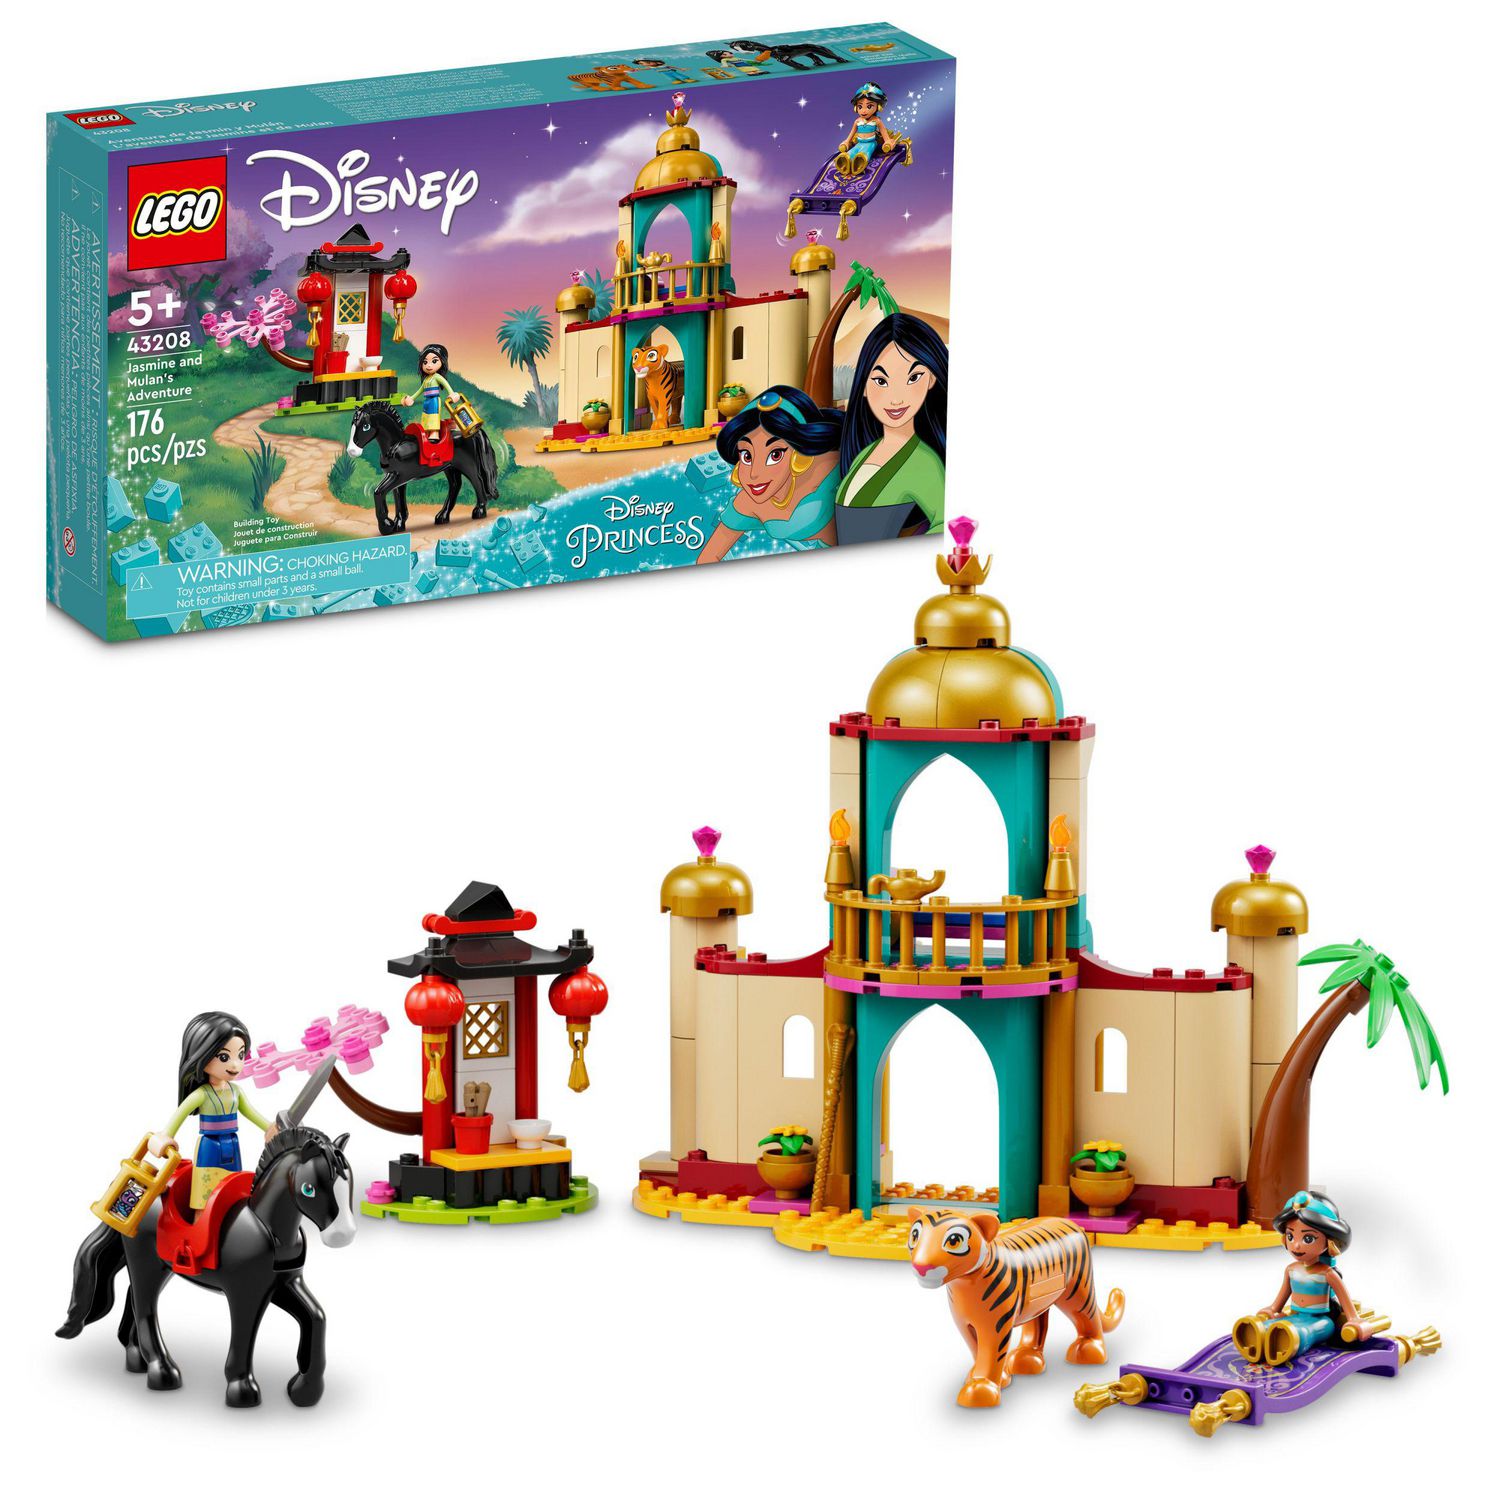 Disney and Mulan's Adventure 43208 Building Kit Pieces) | Walmart Canada